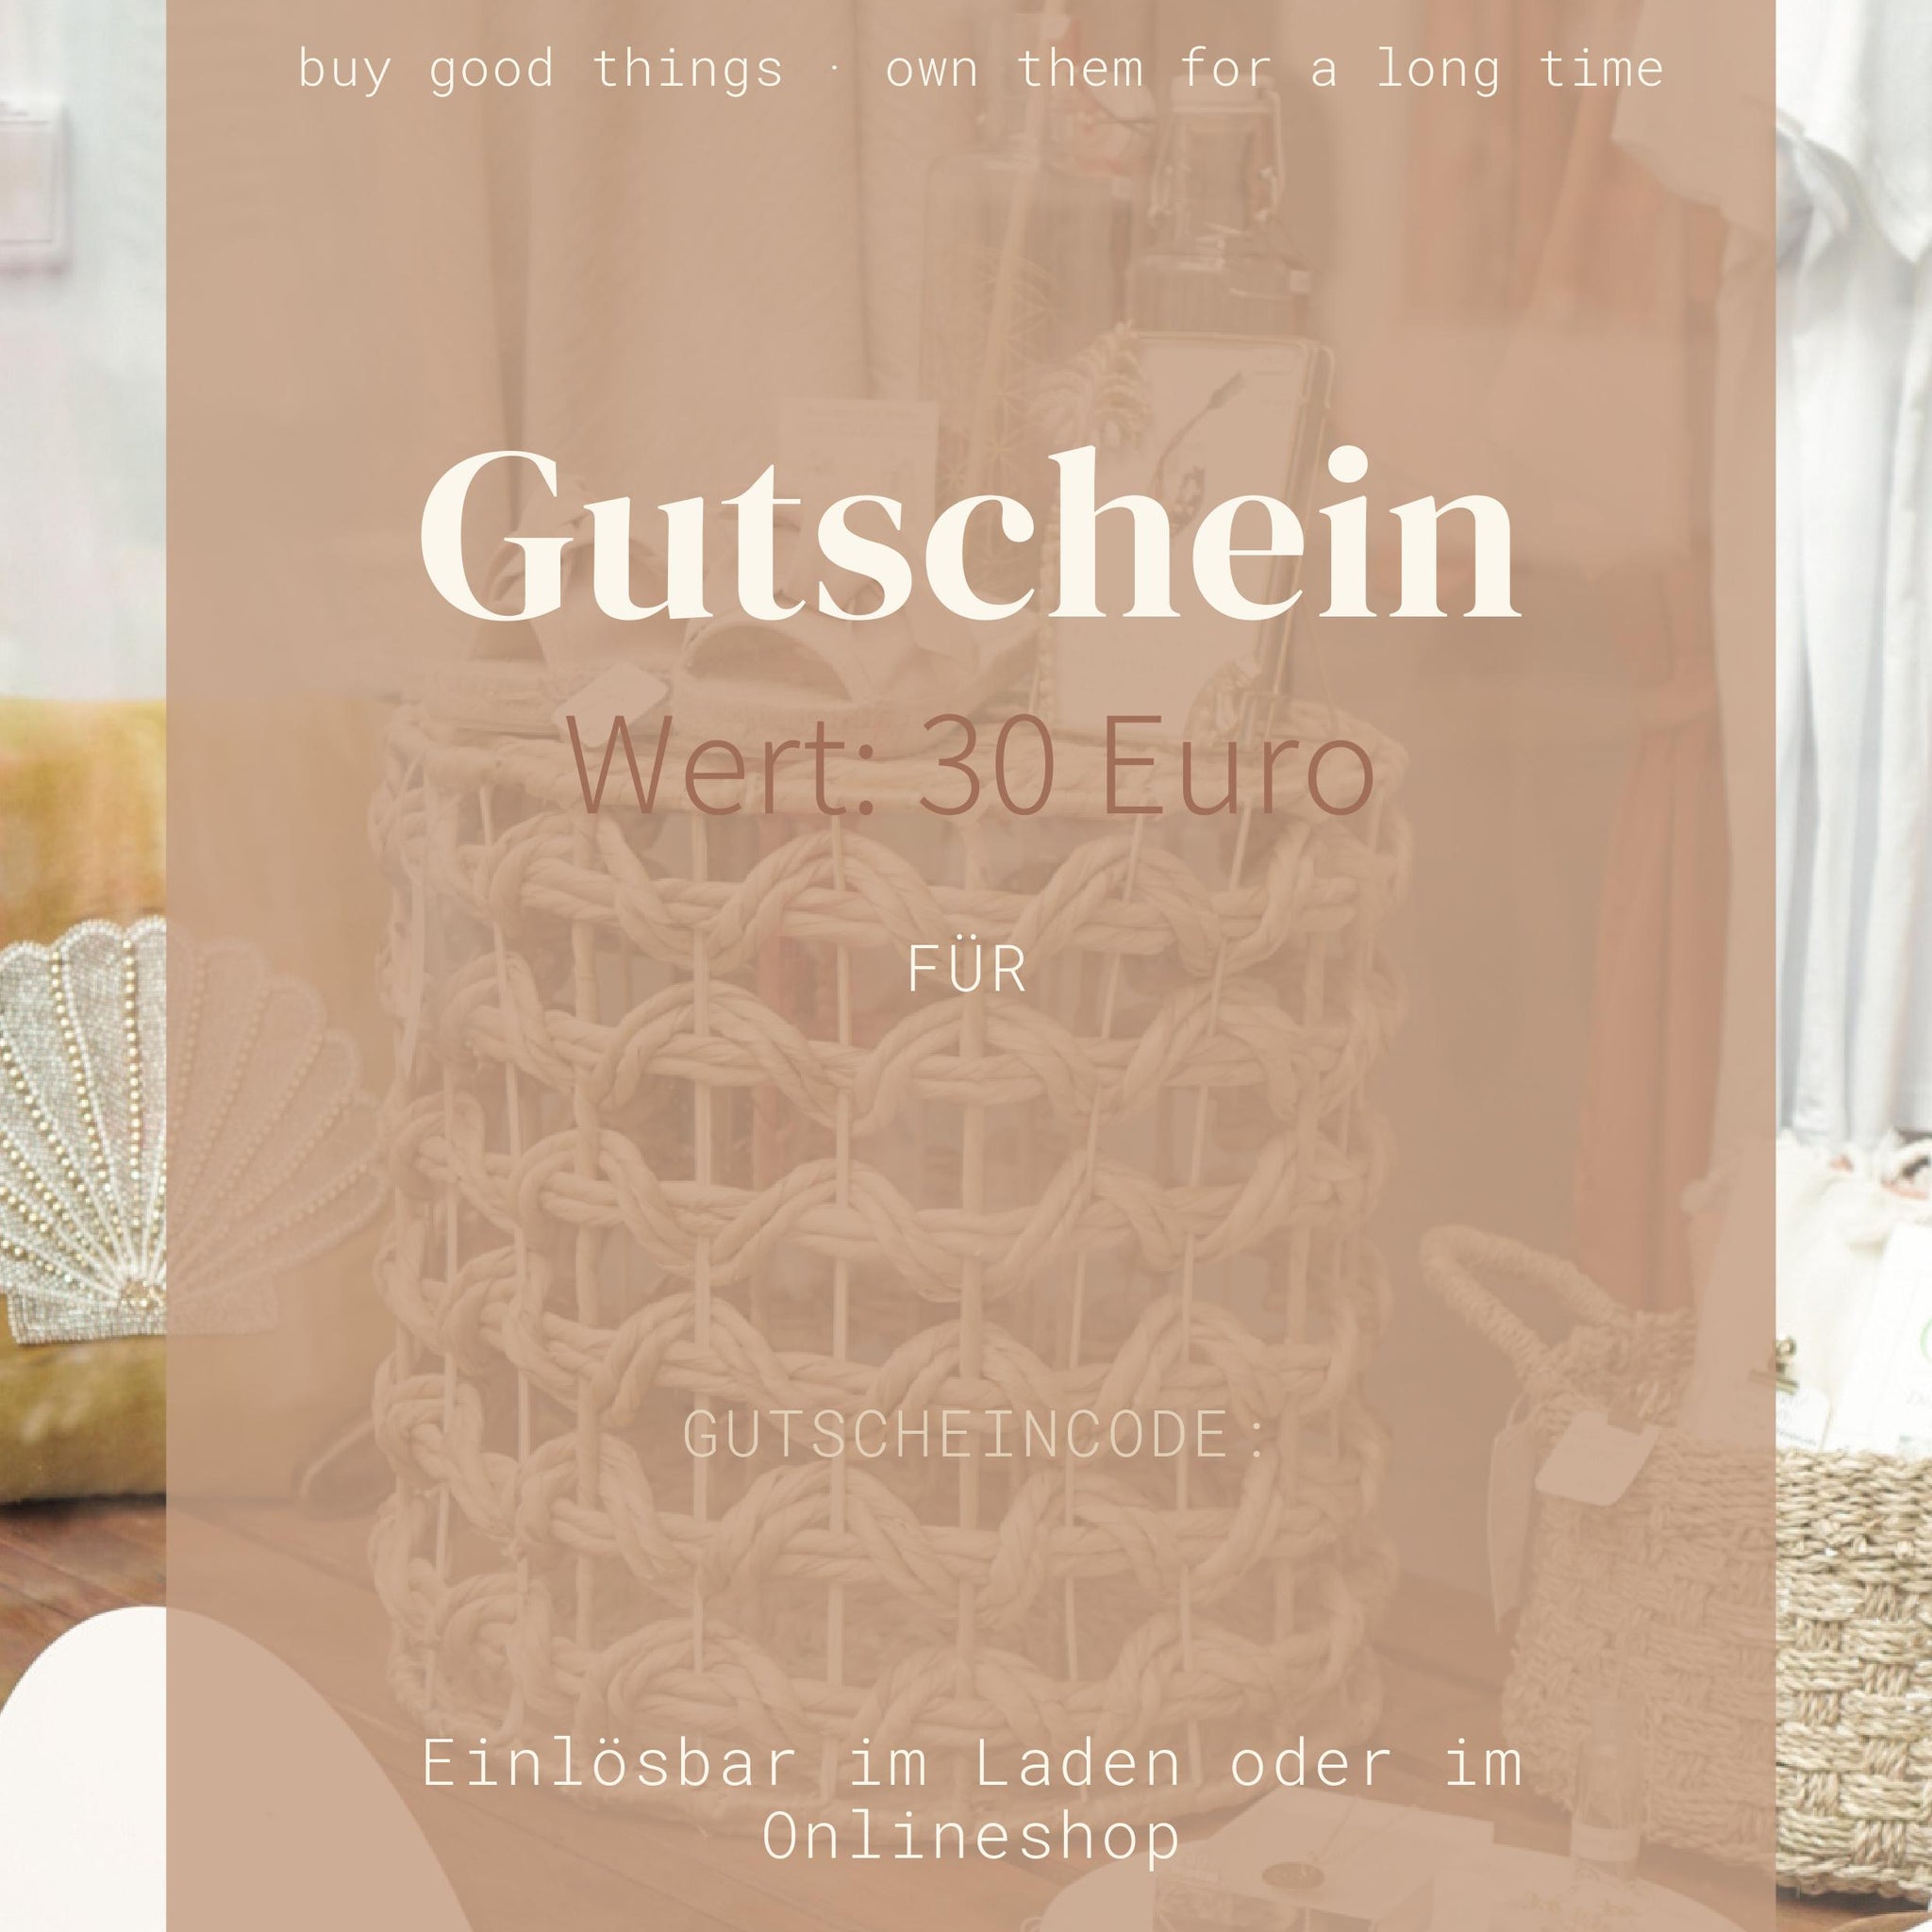 30 Euro Gutschein | ila · ila